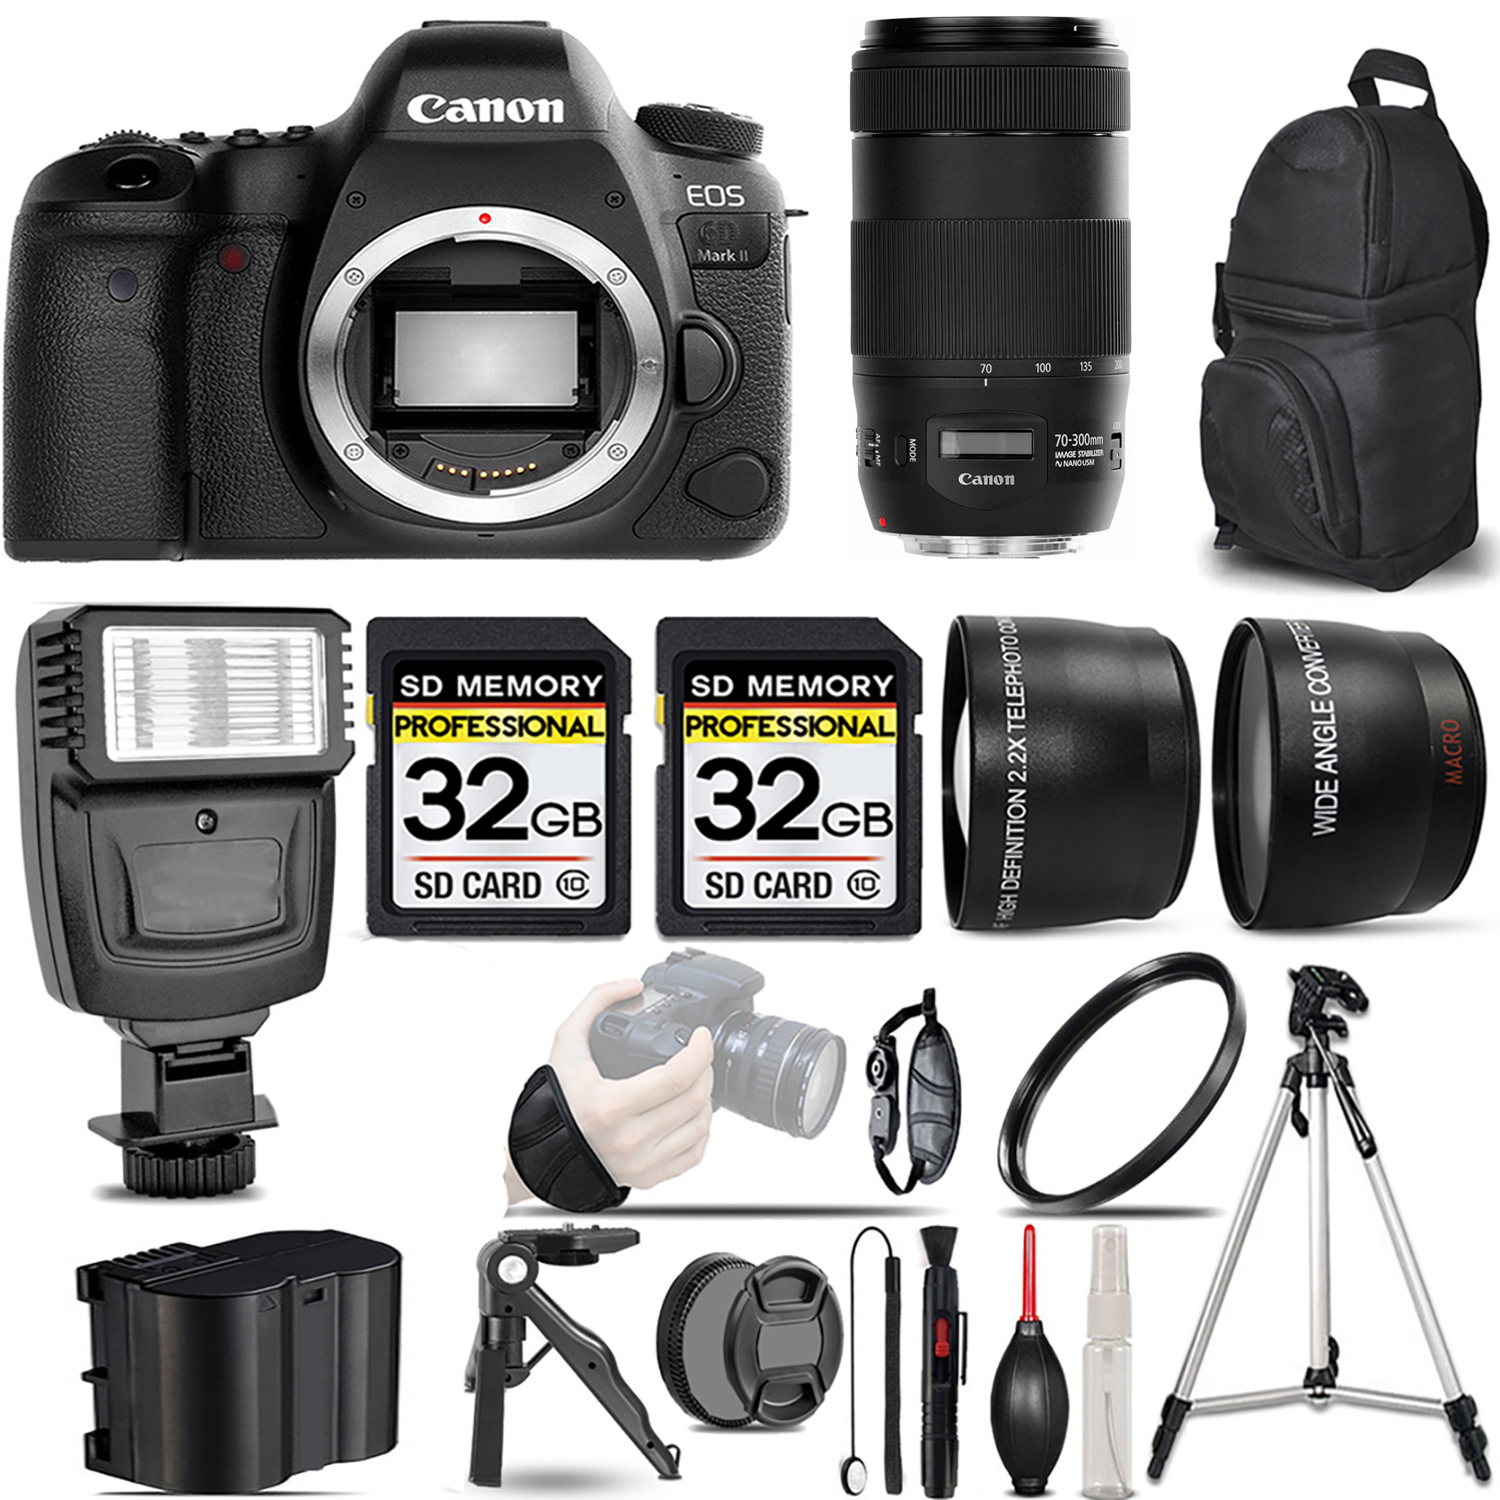 EOS 6D Mark II Camera + 70- 300mm f/4-5.6 IS II USM Lens + Flash + 64GB *FREE SHIPPING*